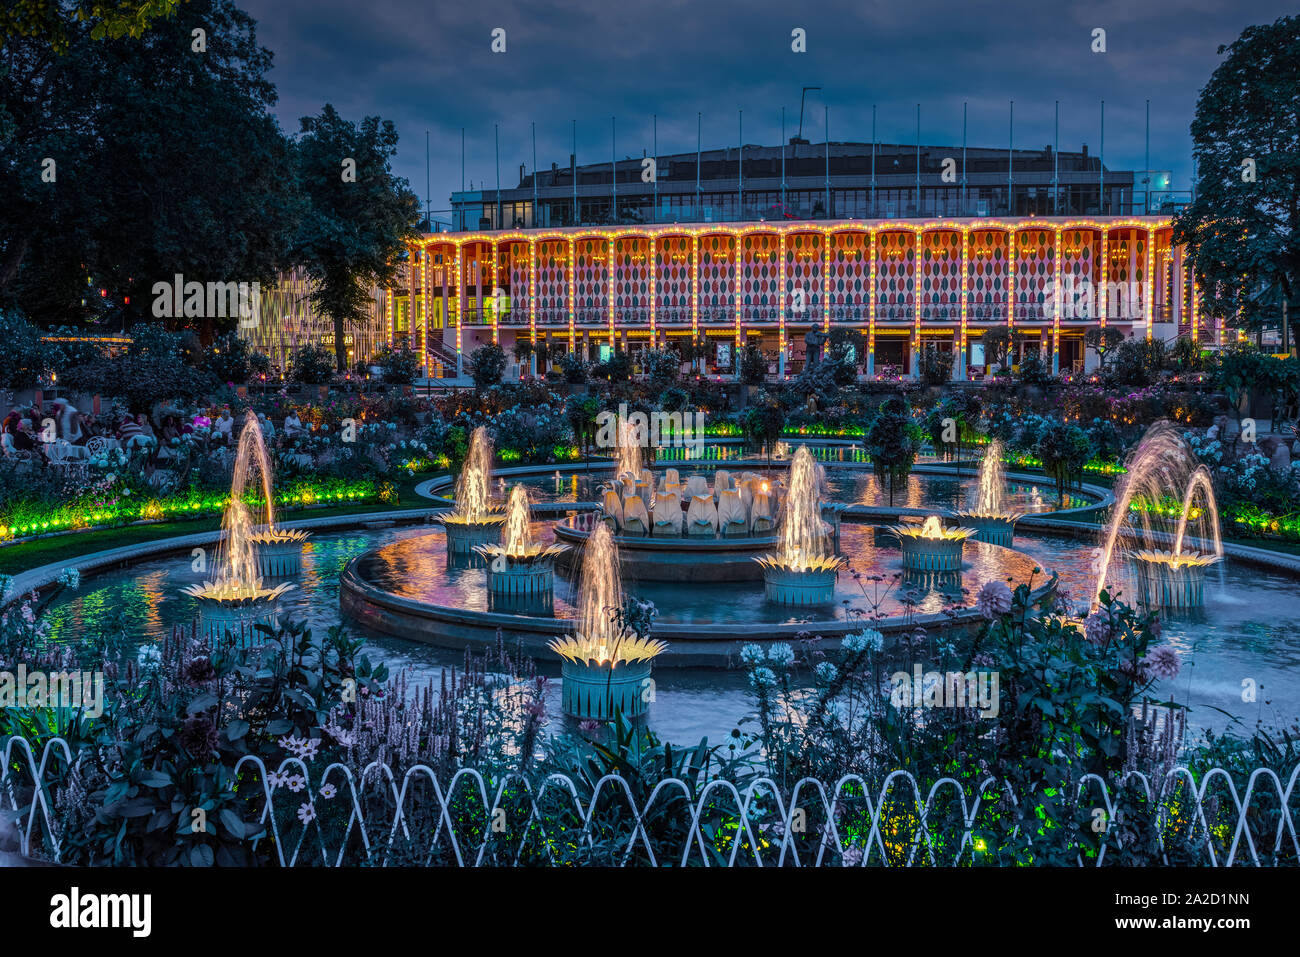 The Tivoli Gardens Concert Hall and fountains illuminated at night in Copenhagen, Denmark. Stock Photo